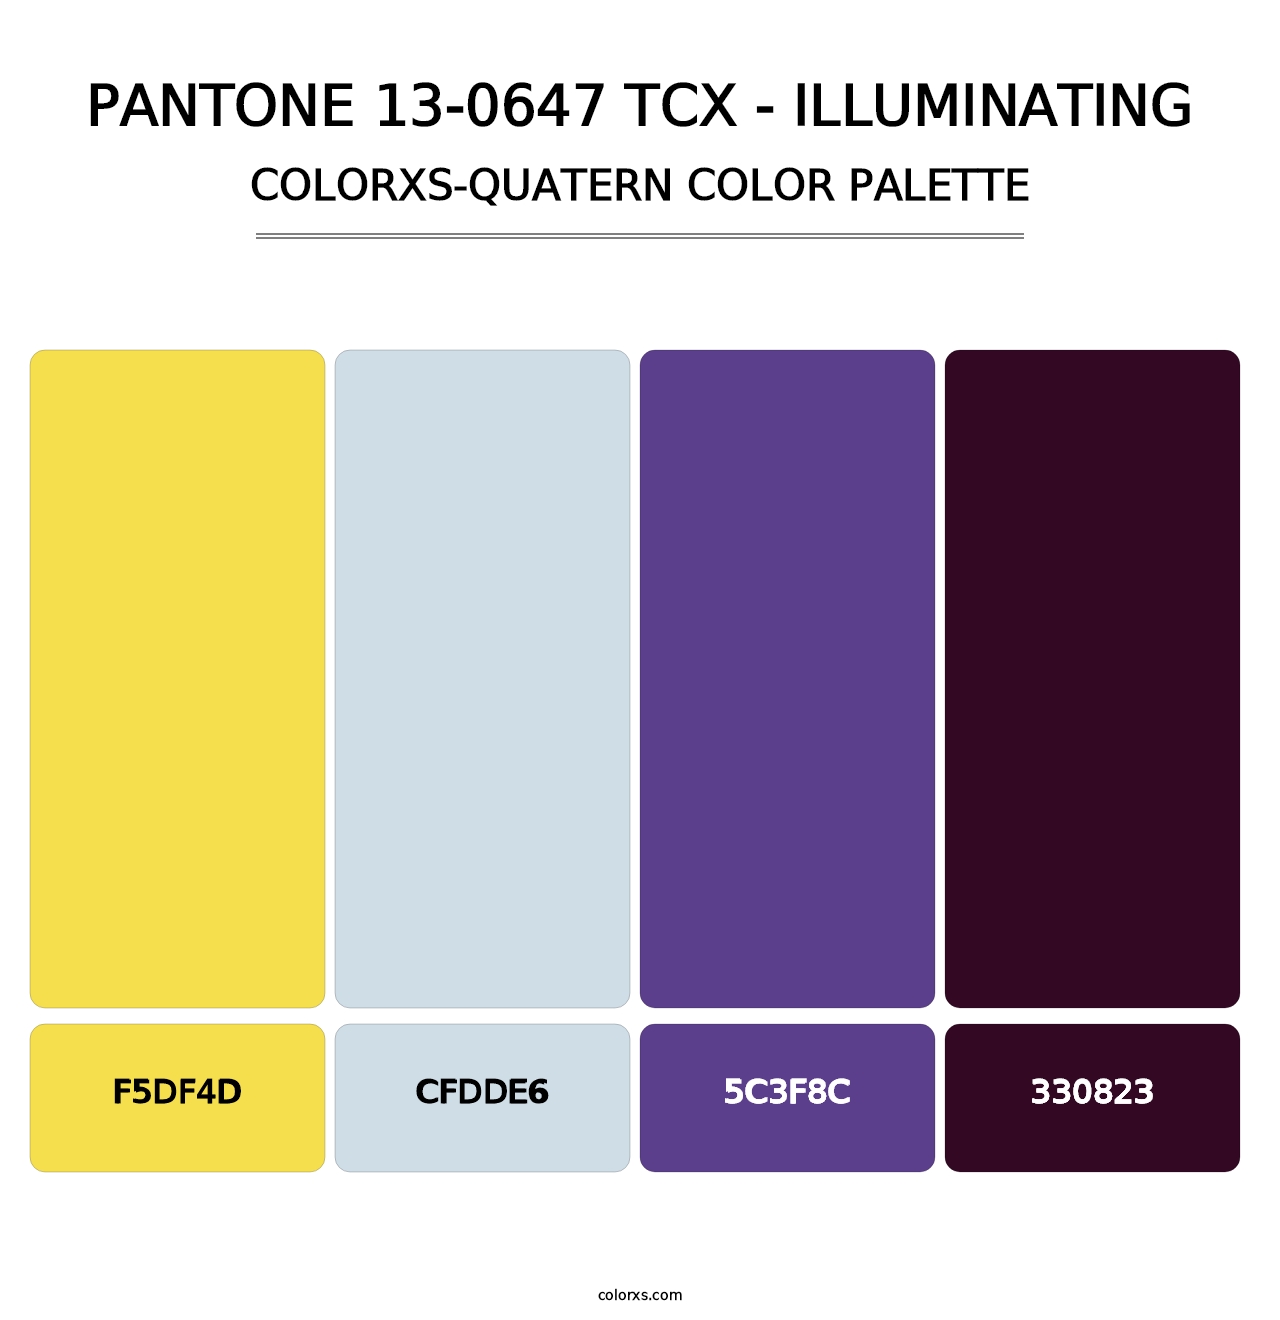 PANTONE 13-0647 TCX - Illuminating - Colorxs Quatern Palette